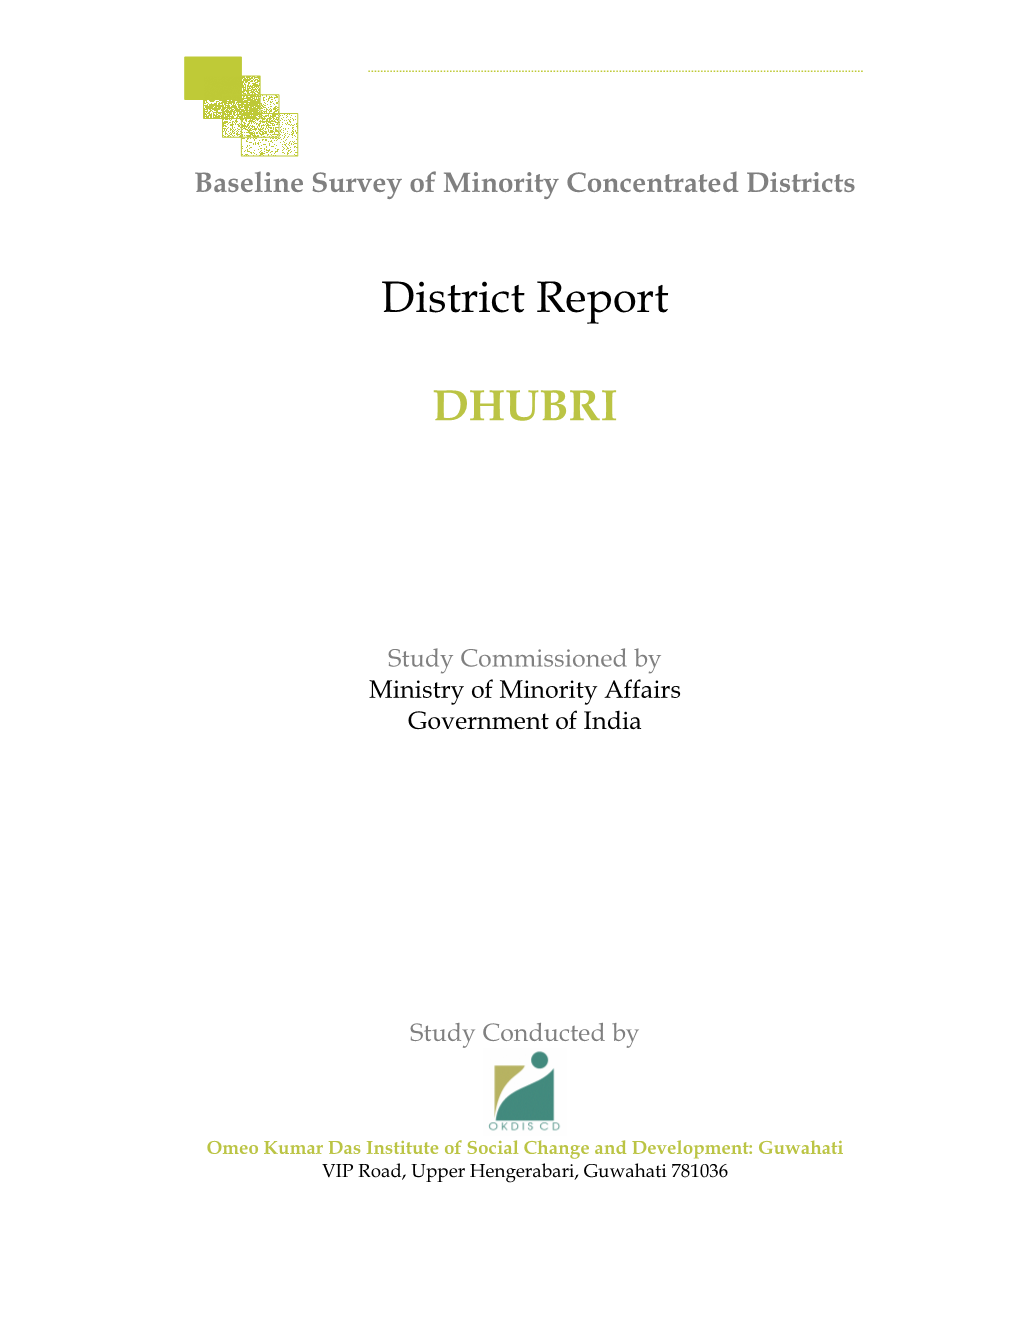 District Report DHUBRI